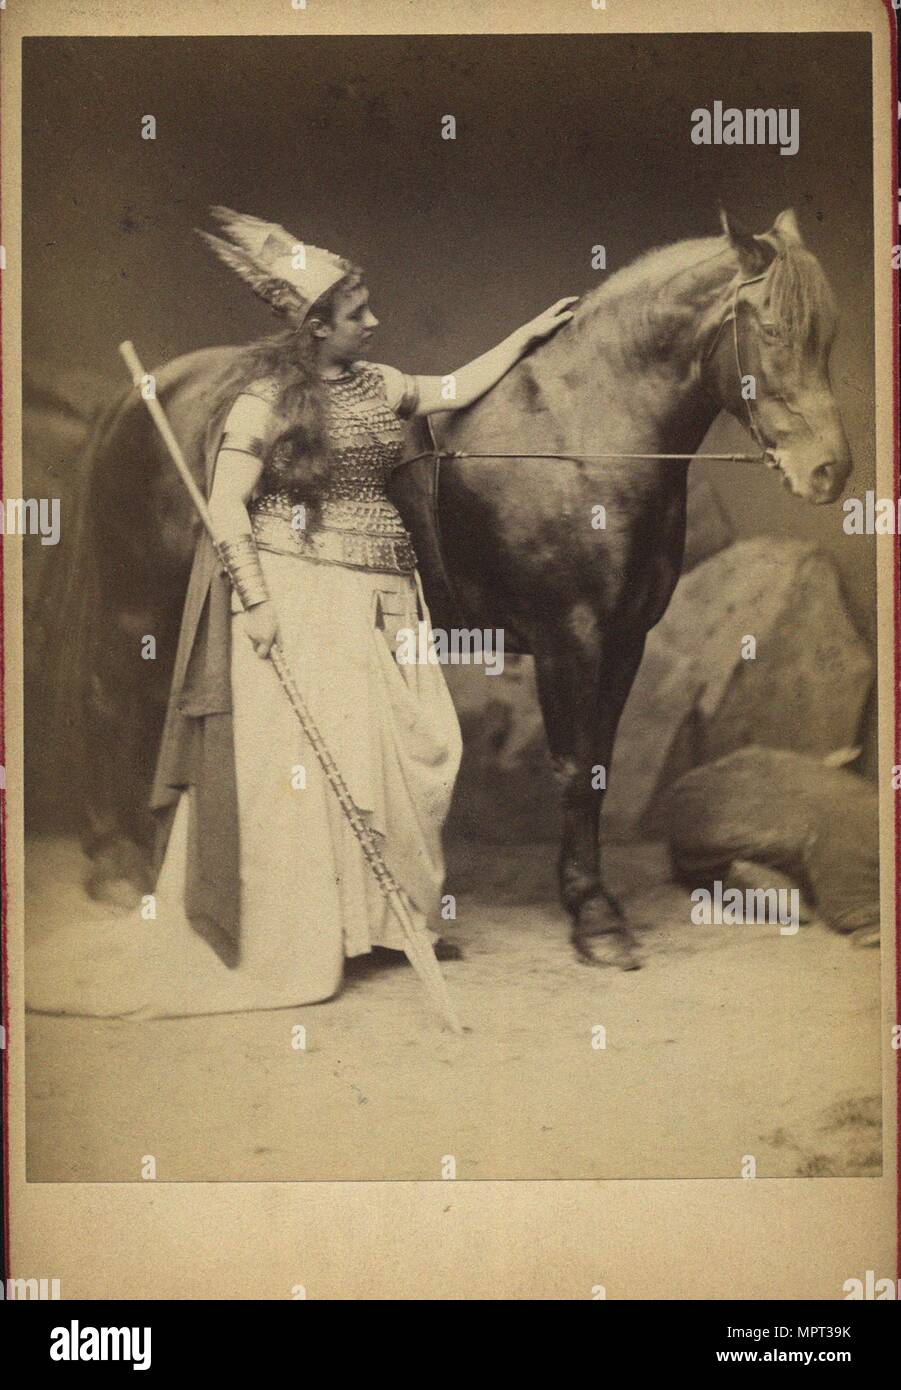 Amalie Materna (1844-1918) as Brünnhilde in Opera Der Ring des Nibelungen by R. Wagner, 1876. Stock Photo